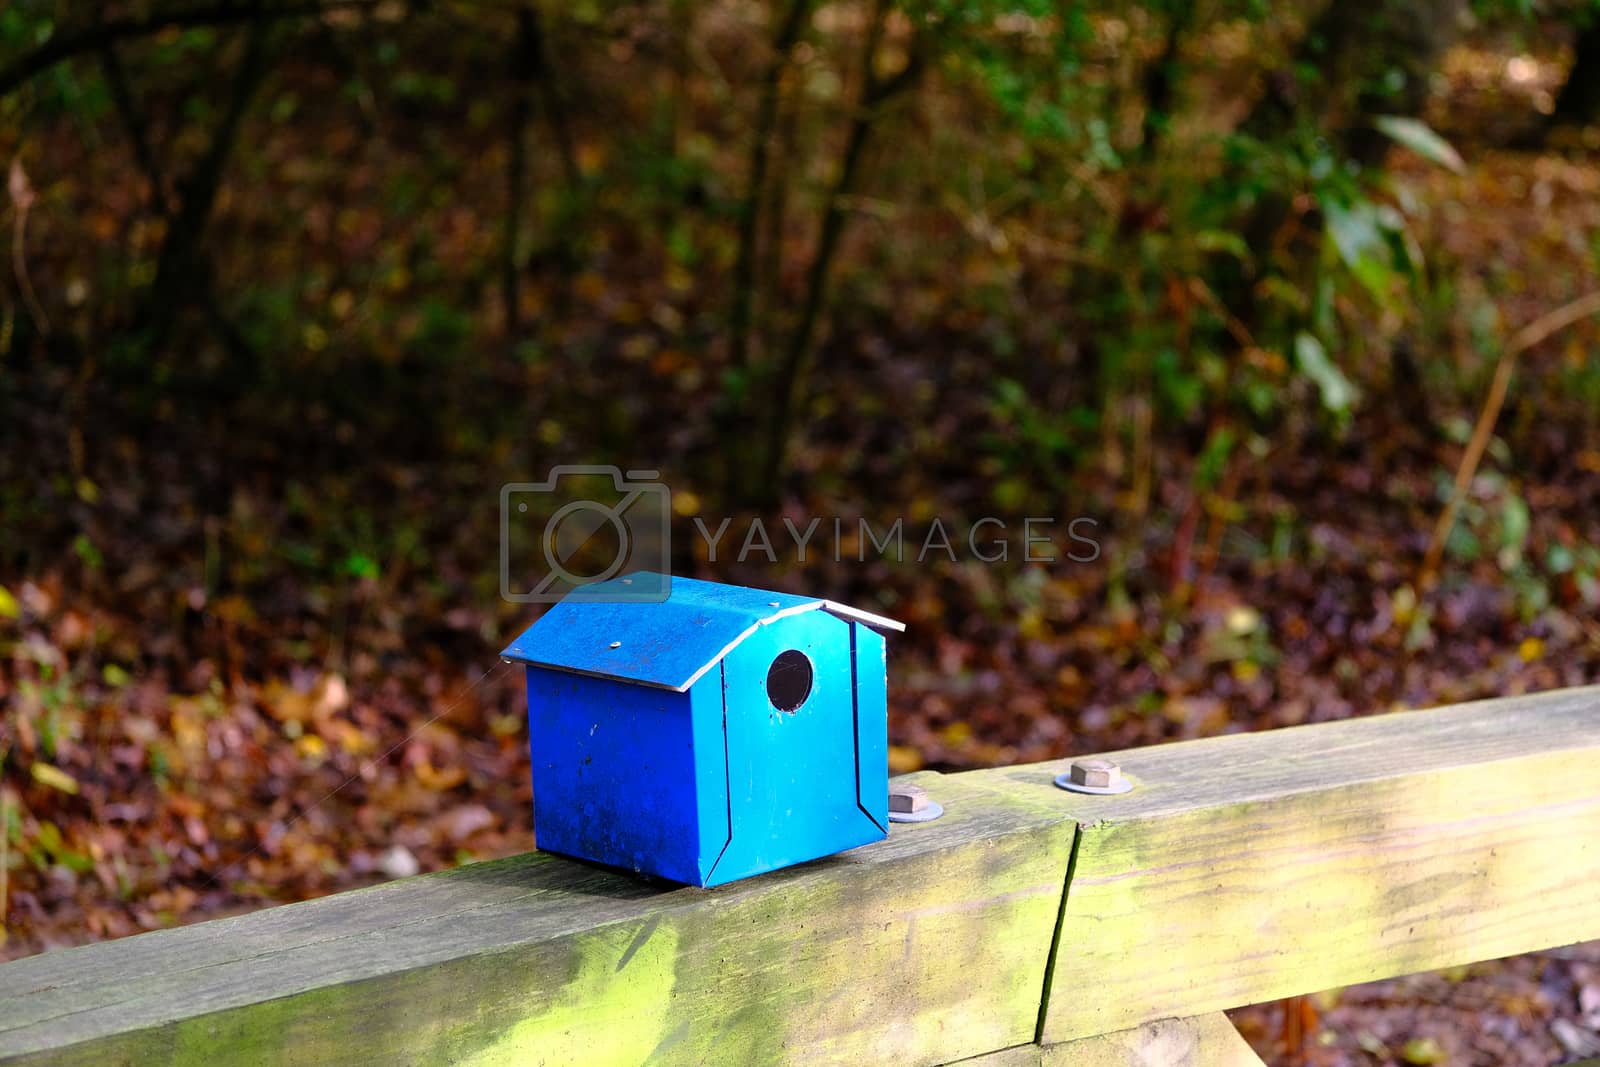 Royalty free image of Blue Birdhouse on Wood Railing by dbvirago